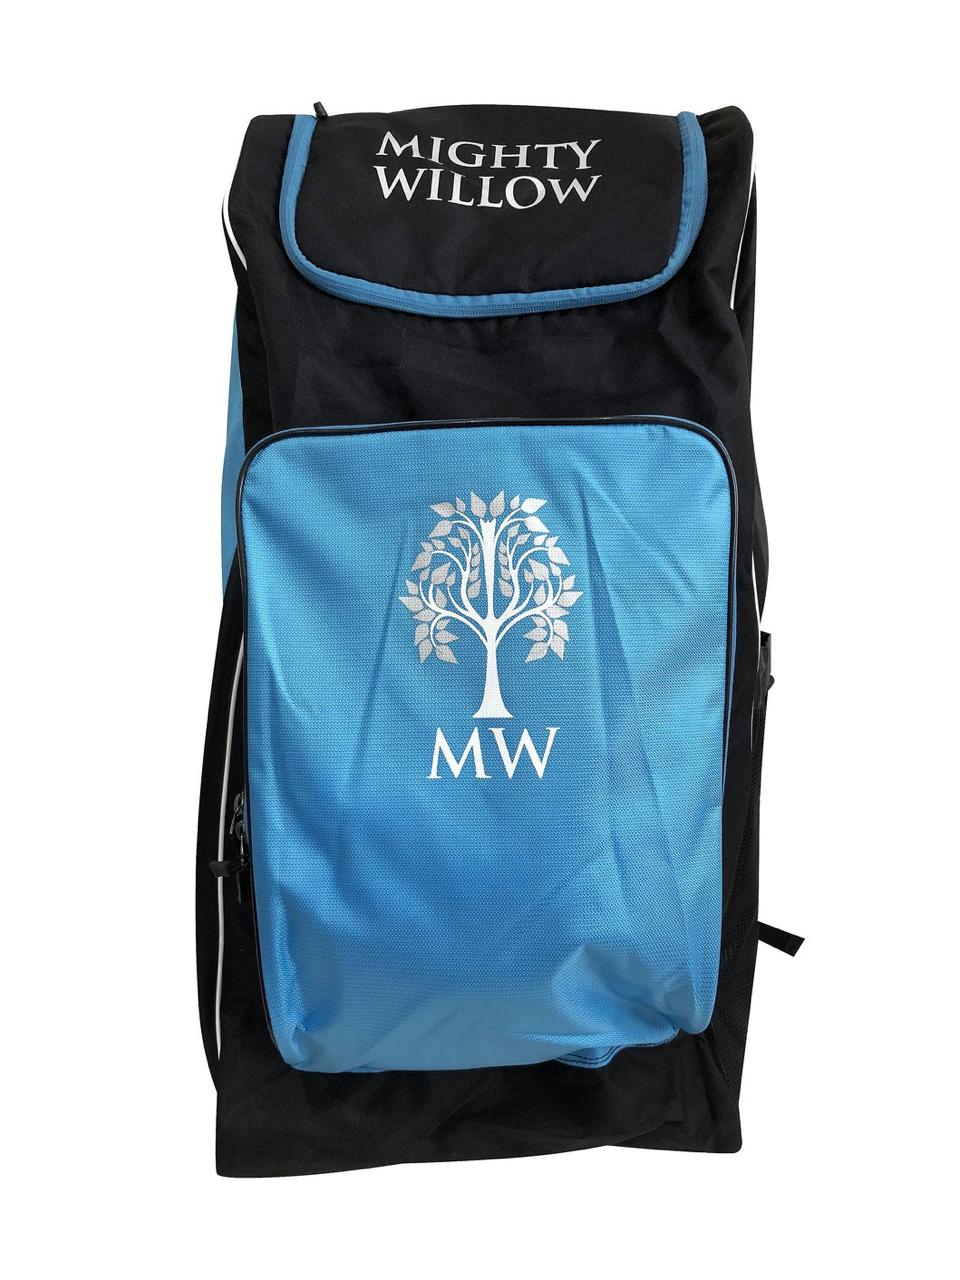 Mighty Willow Junior Duffle Bag Kit Bag ecricstore 